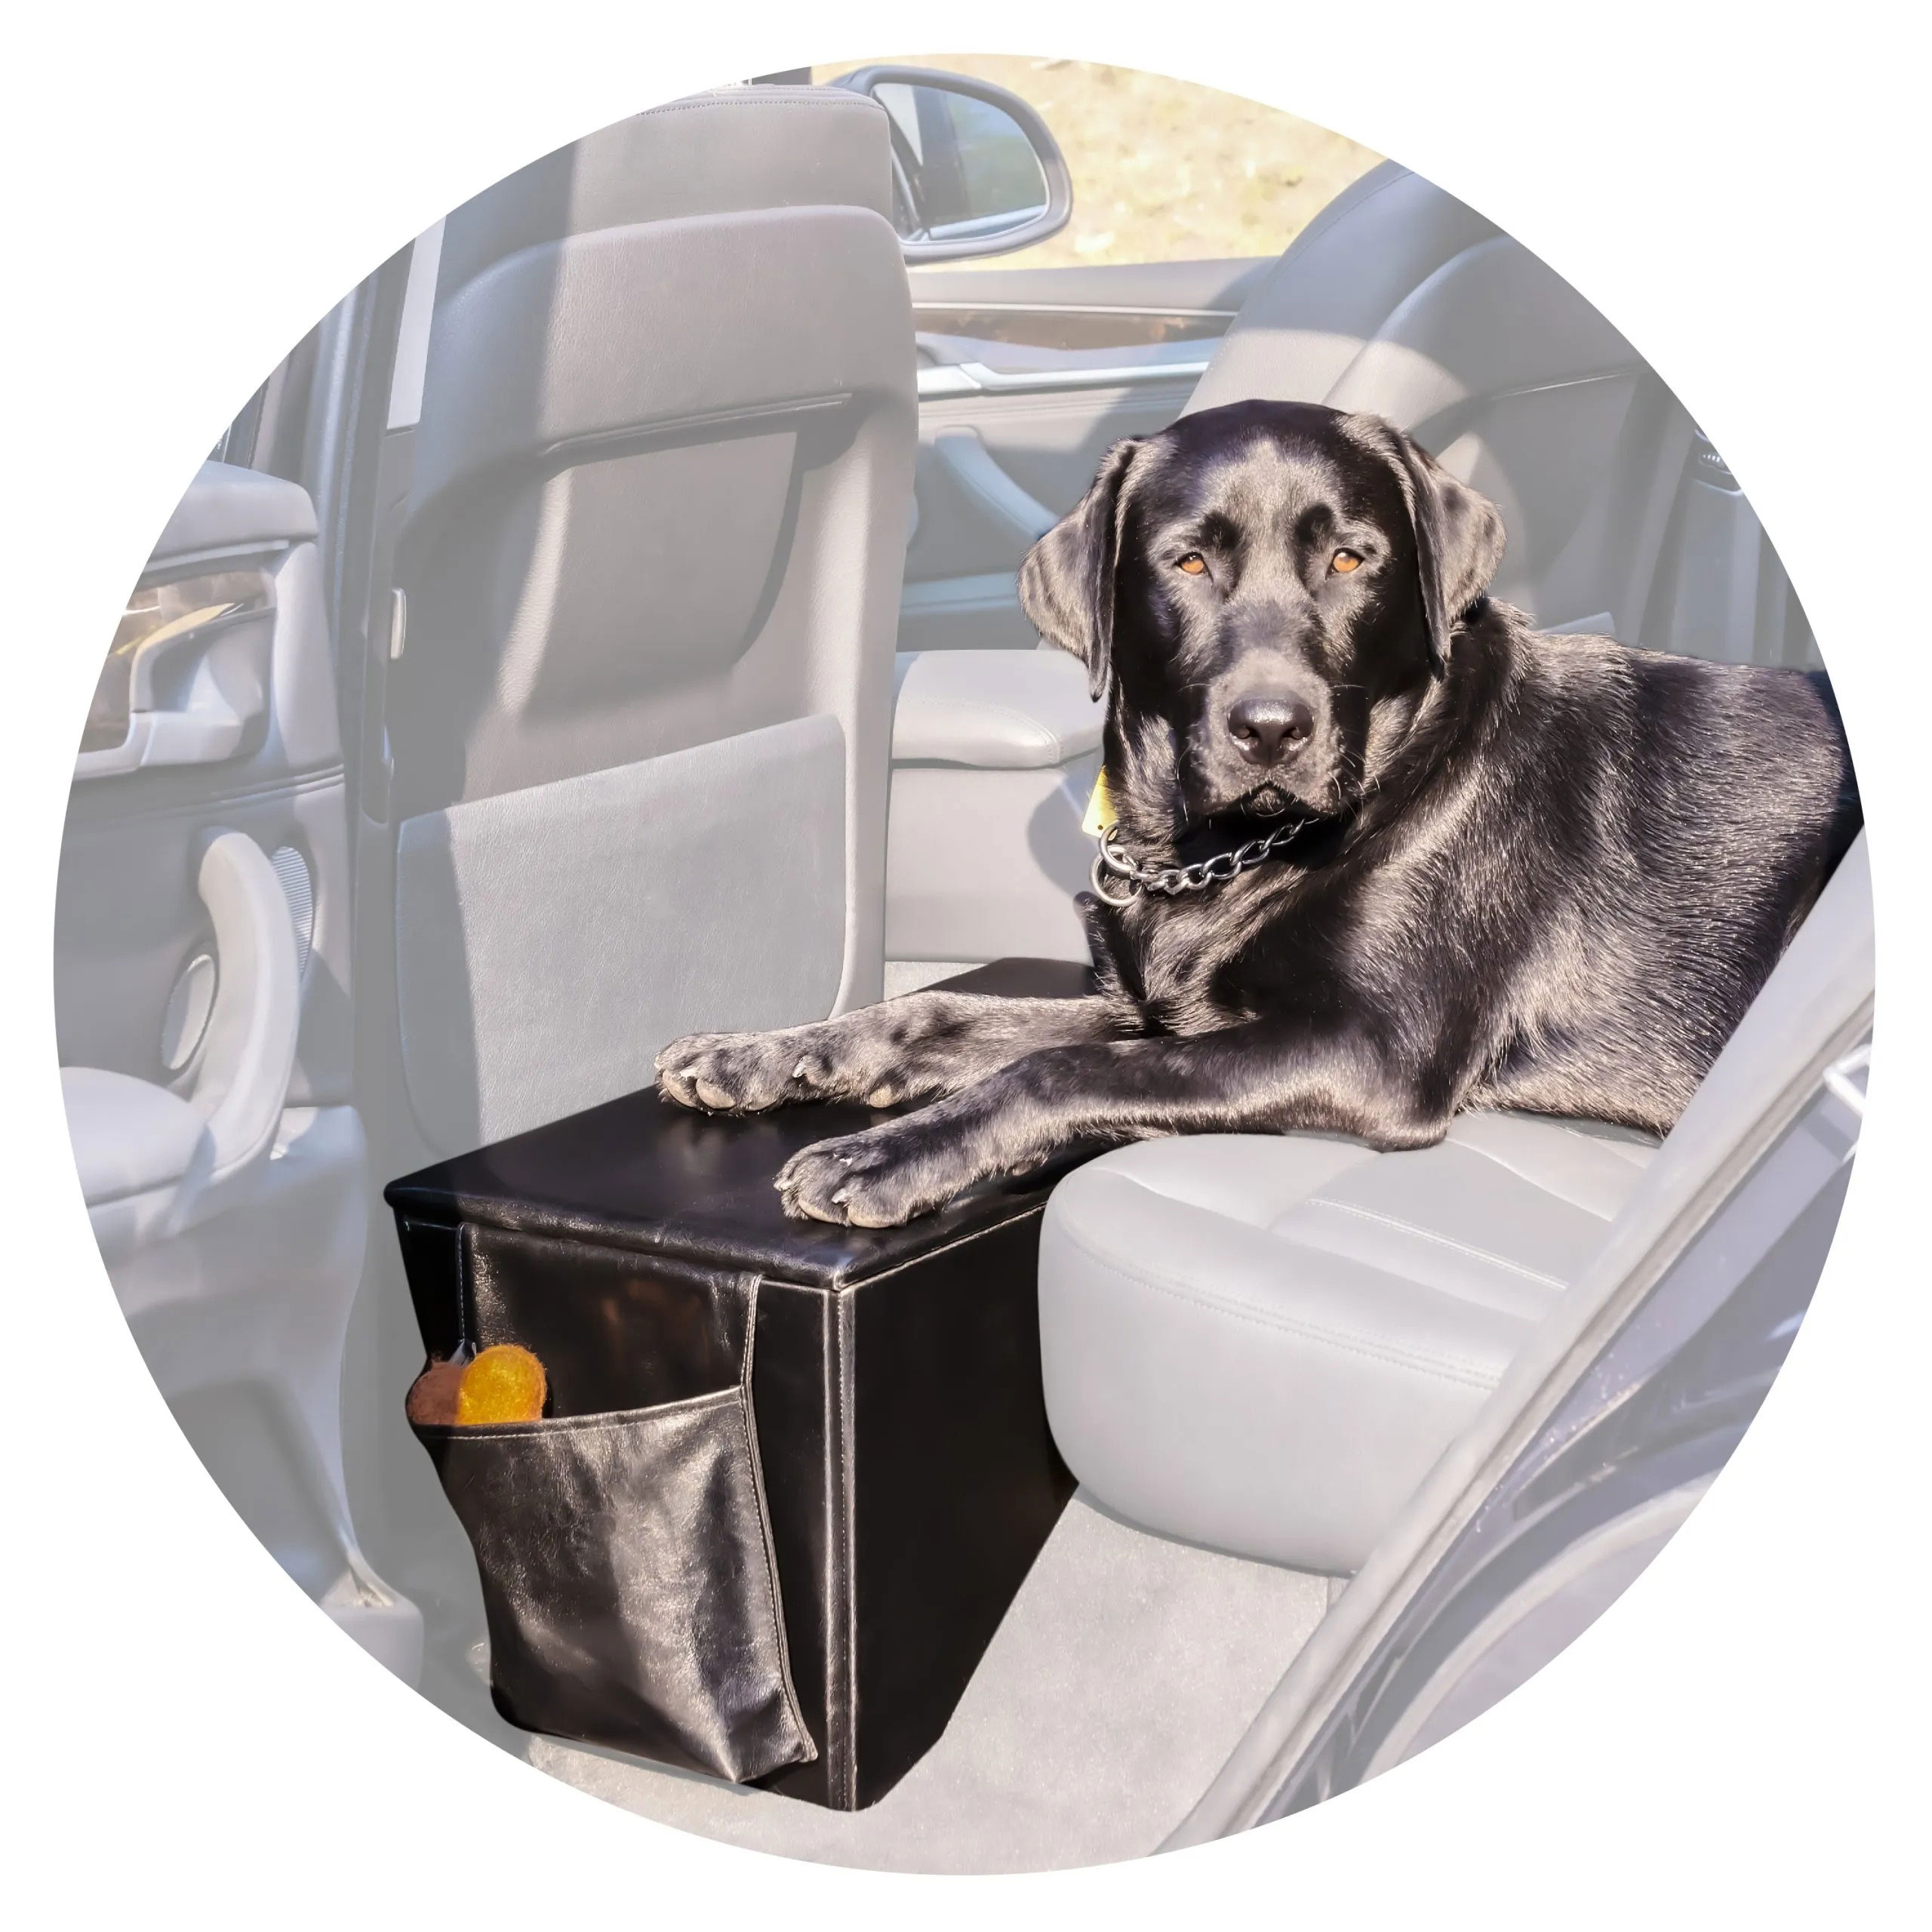 Solid-Foam Backseat Extender  Dog accessories, Dog travel accessories, Dog  car accessories